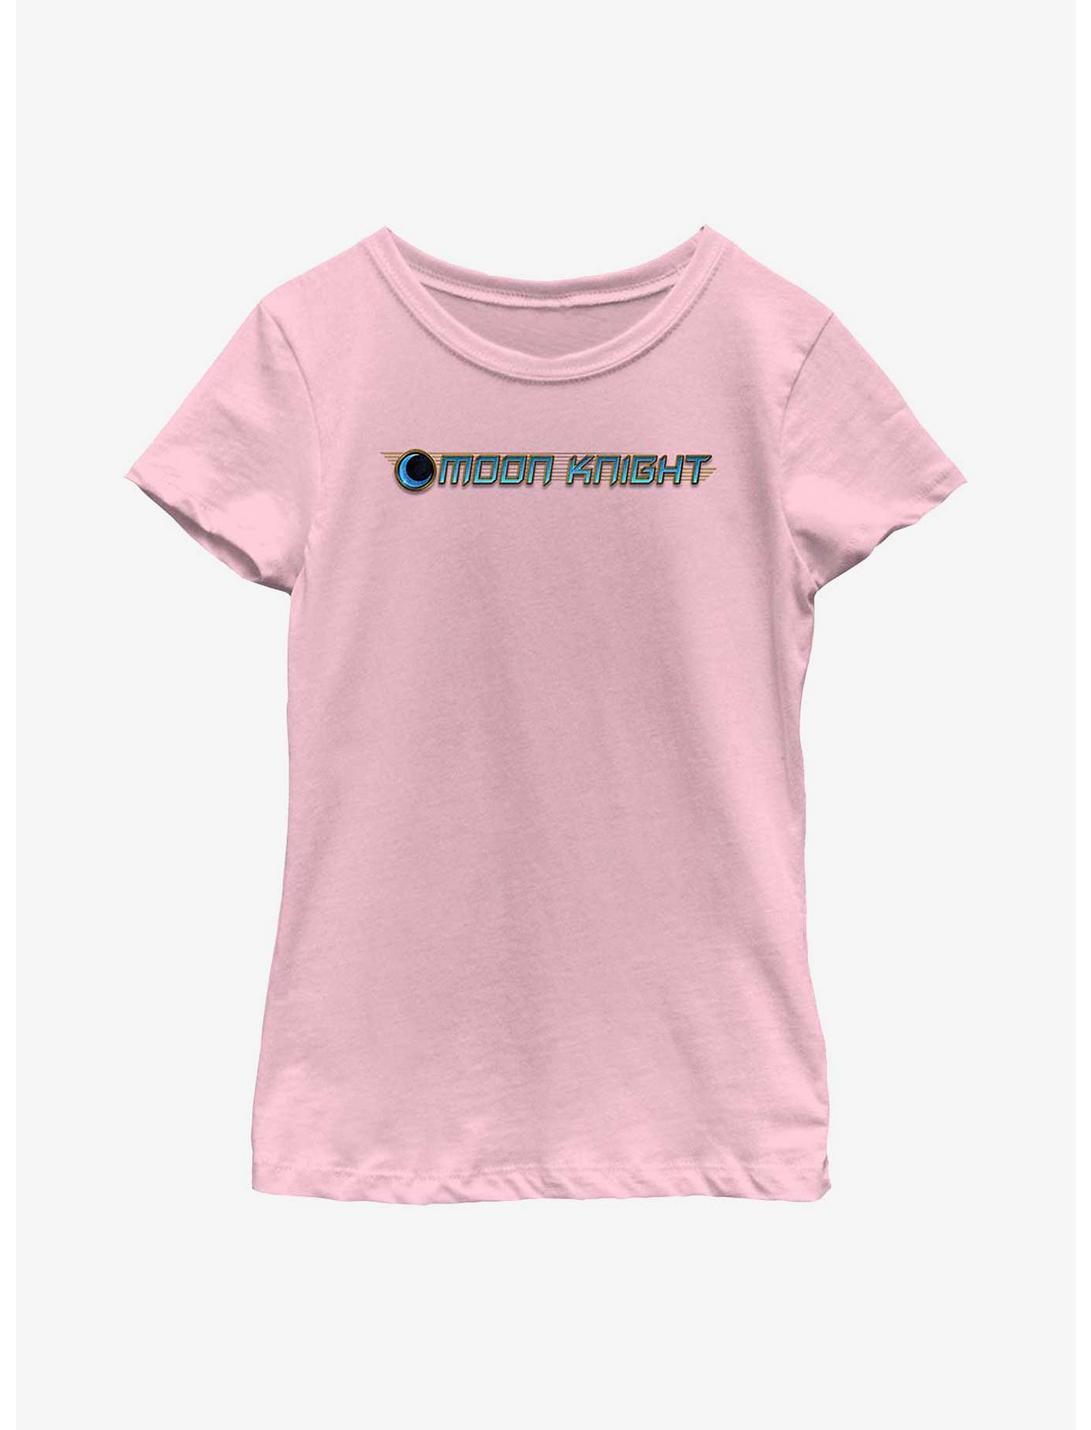 Marvel Moon Knight Logo Youth Girls T-Shirt, PINK, hi-res